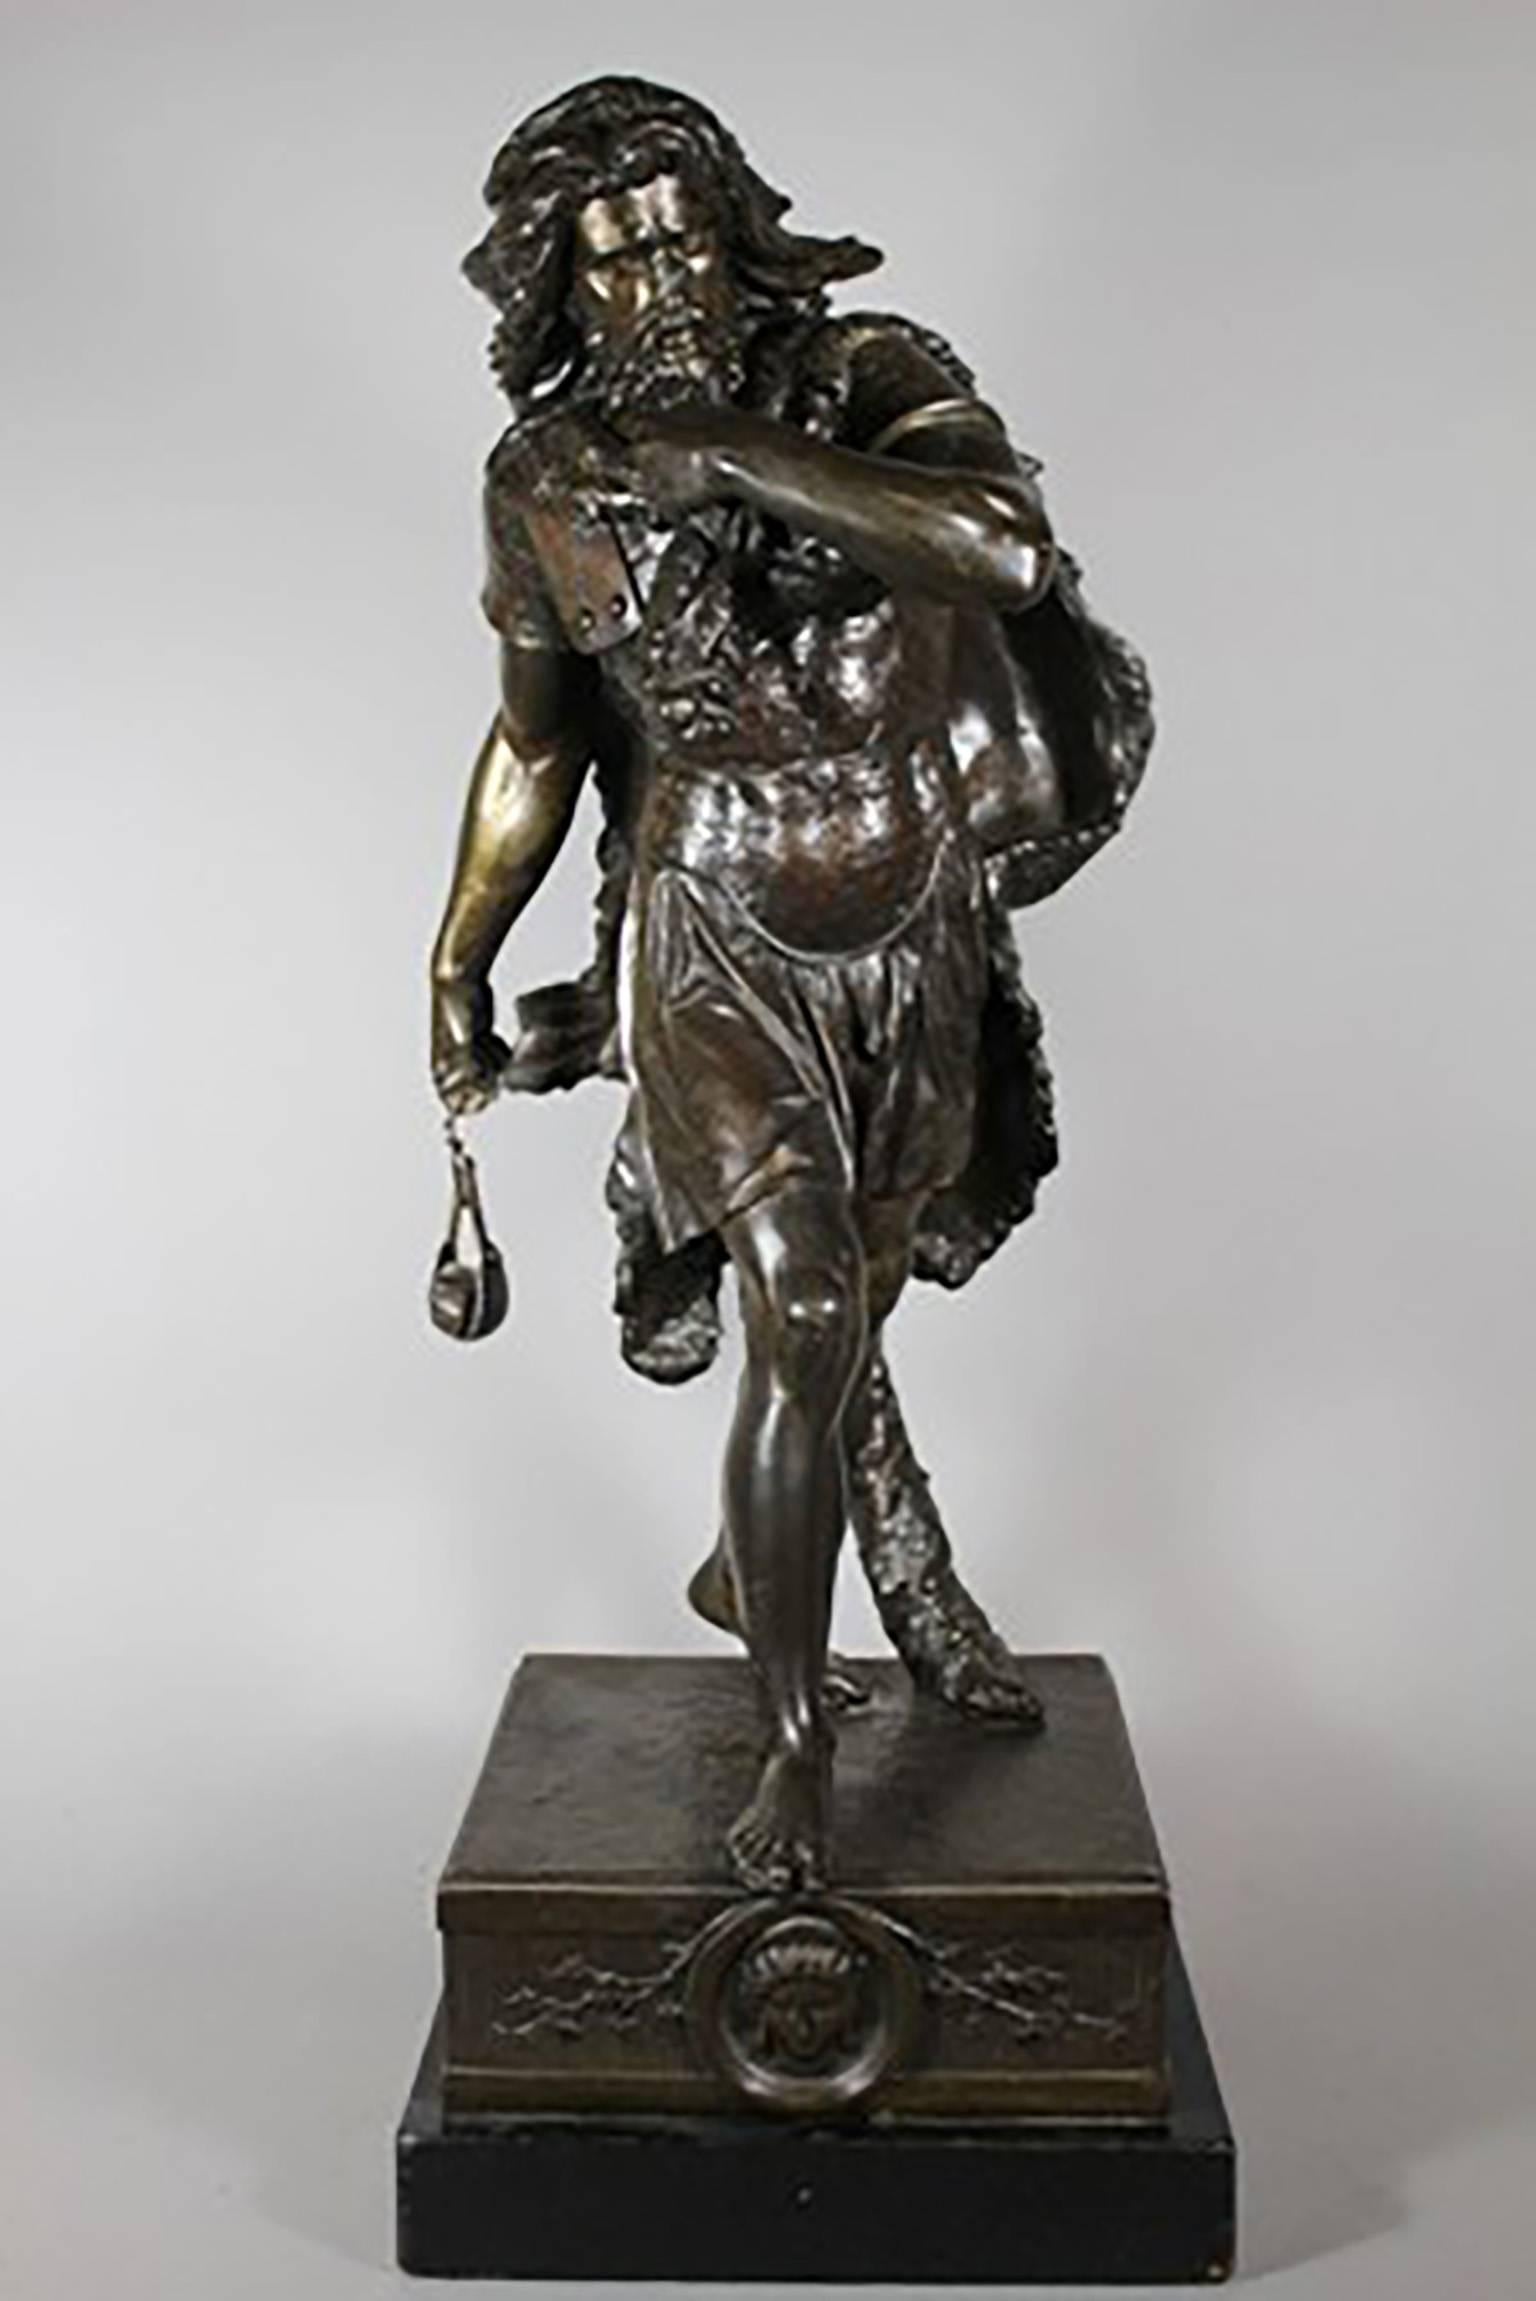 Unknown Figurative Sculpture - Large Bronze Sculpture of David slaying Goliath